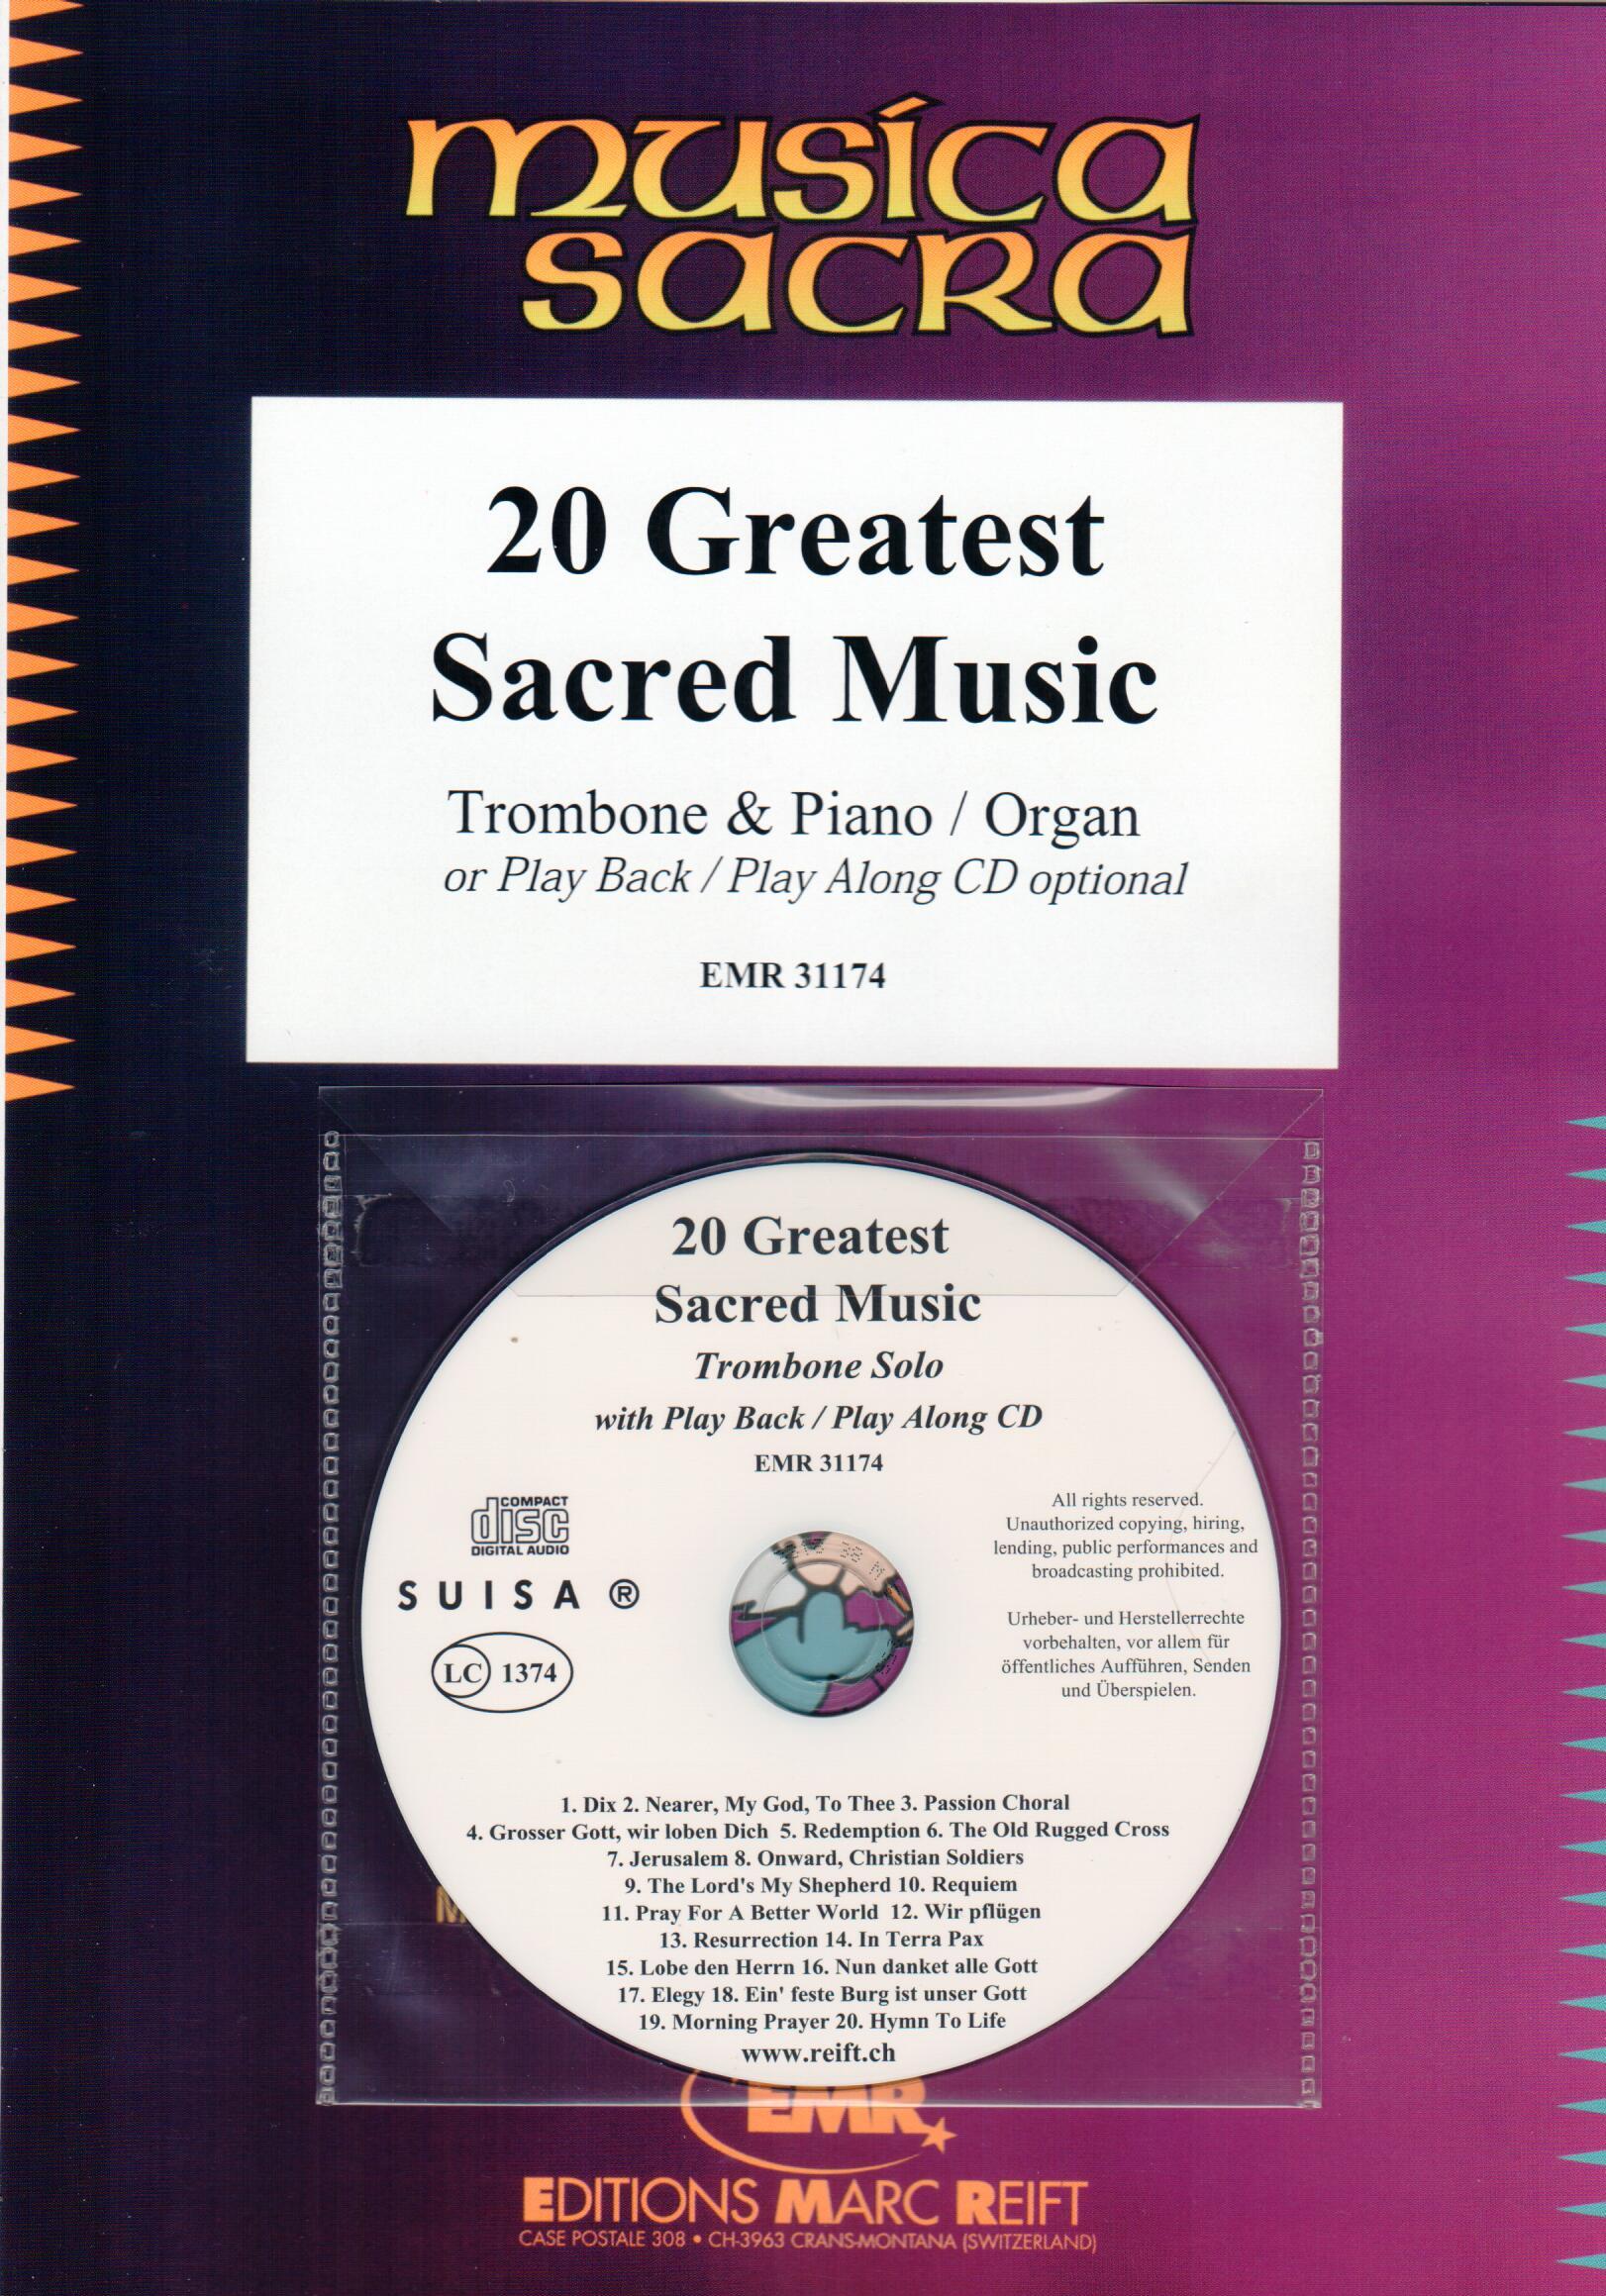 20 GREATEST SACRED MUSIC, SOLOS - Trombone